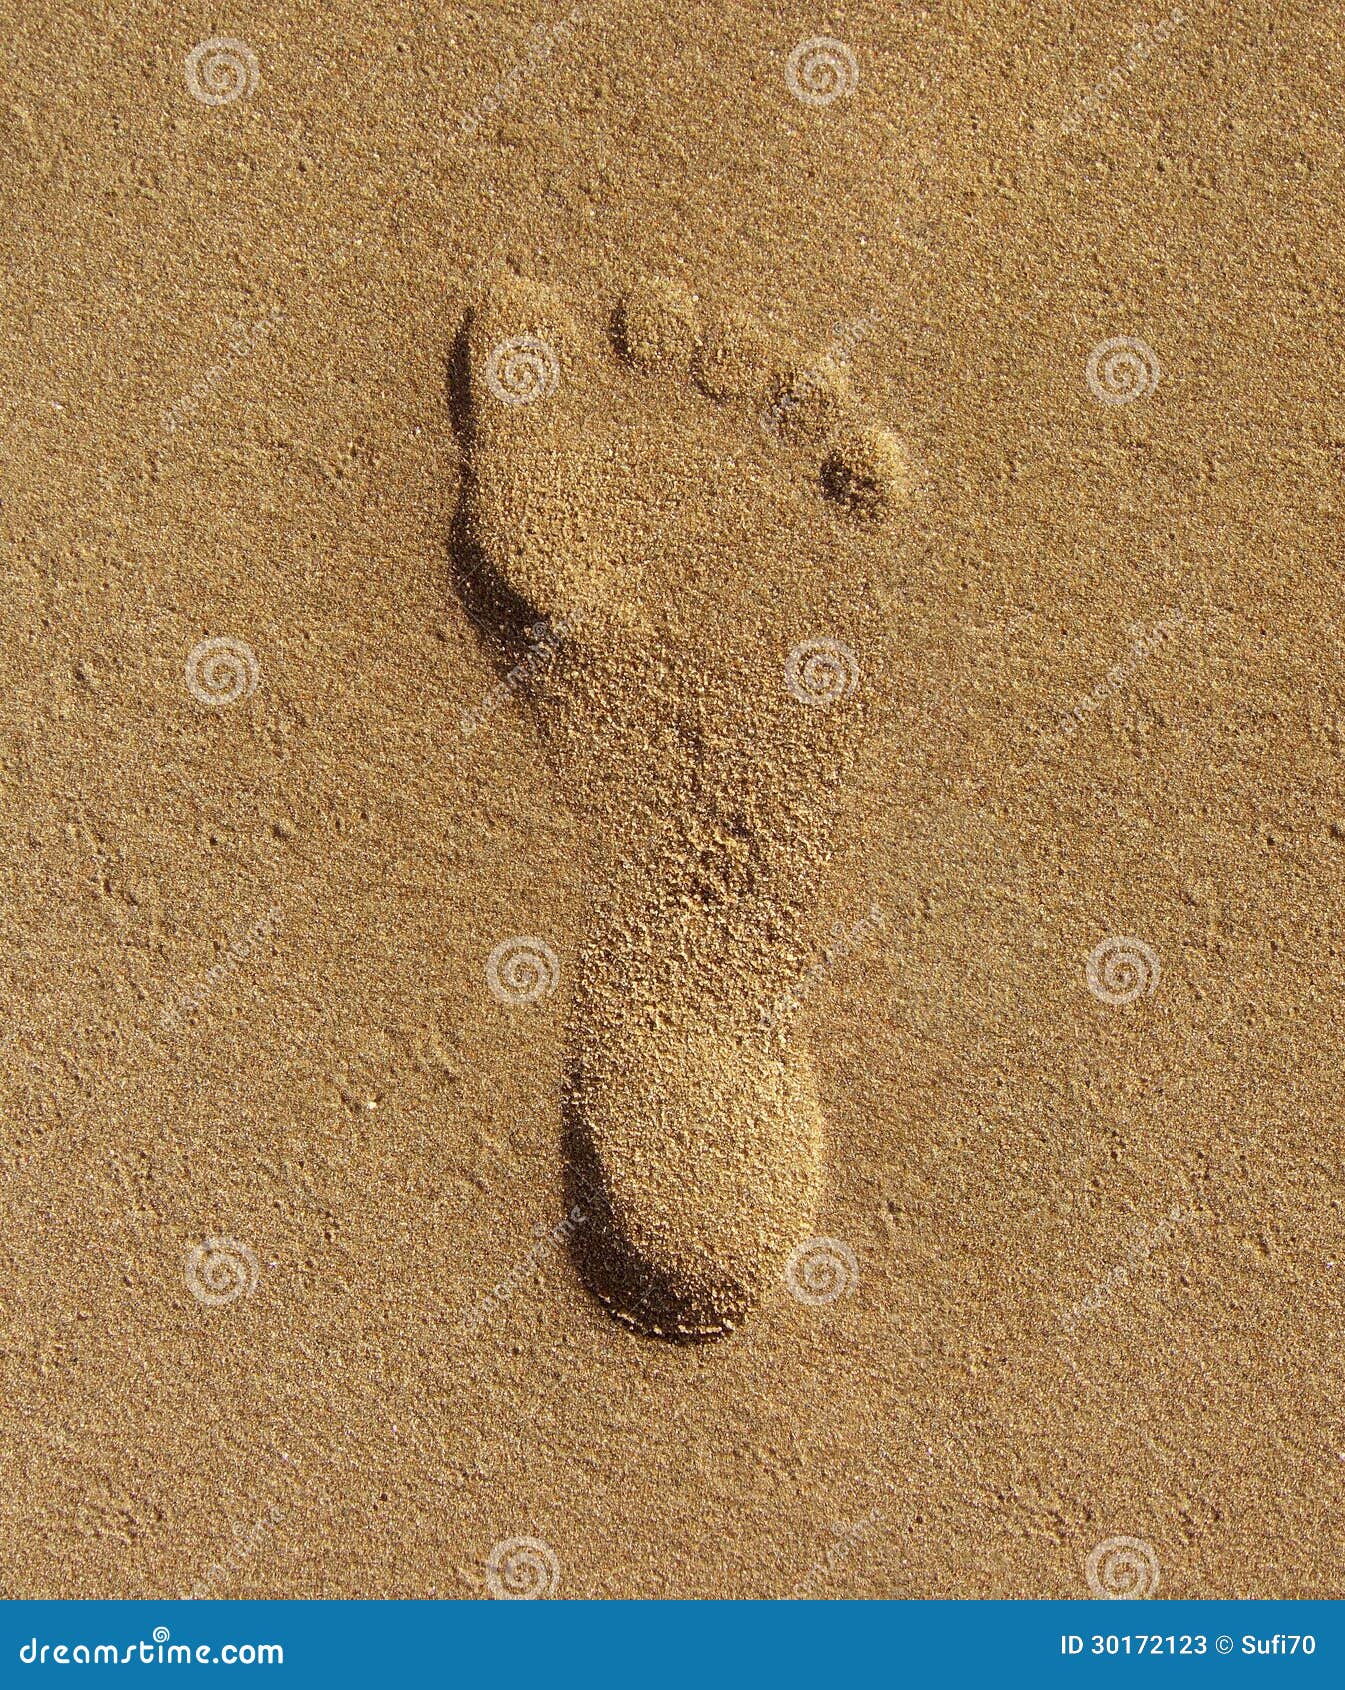 Footstep on sand stock image. Image of step, beige, foot - 30172123